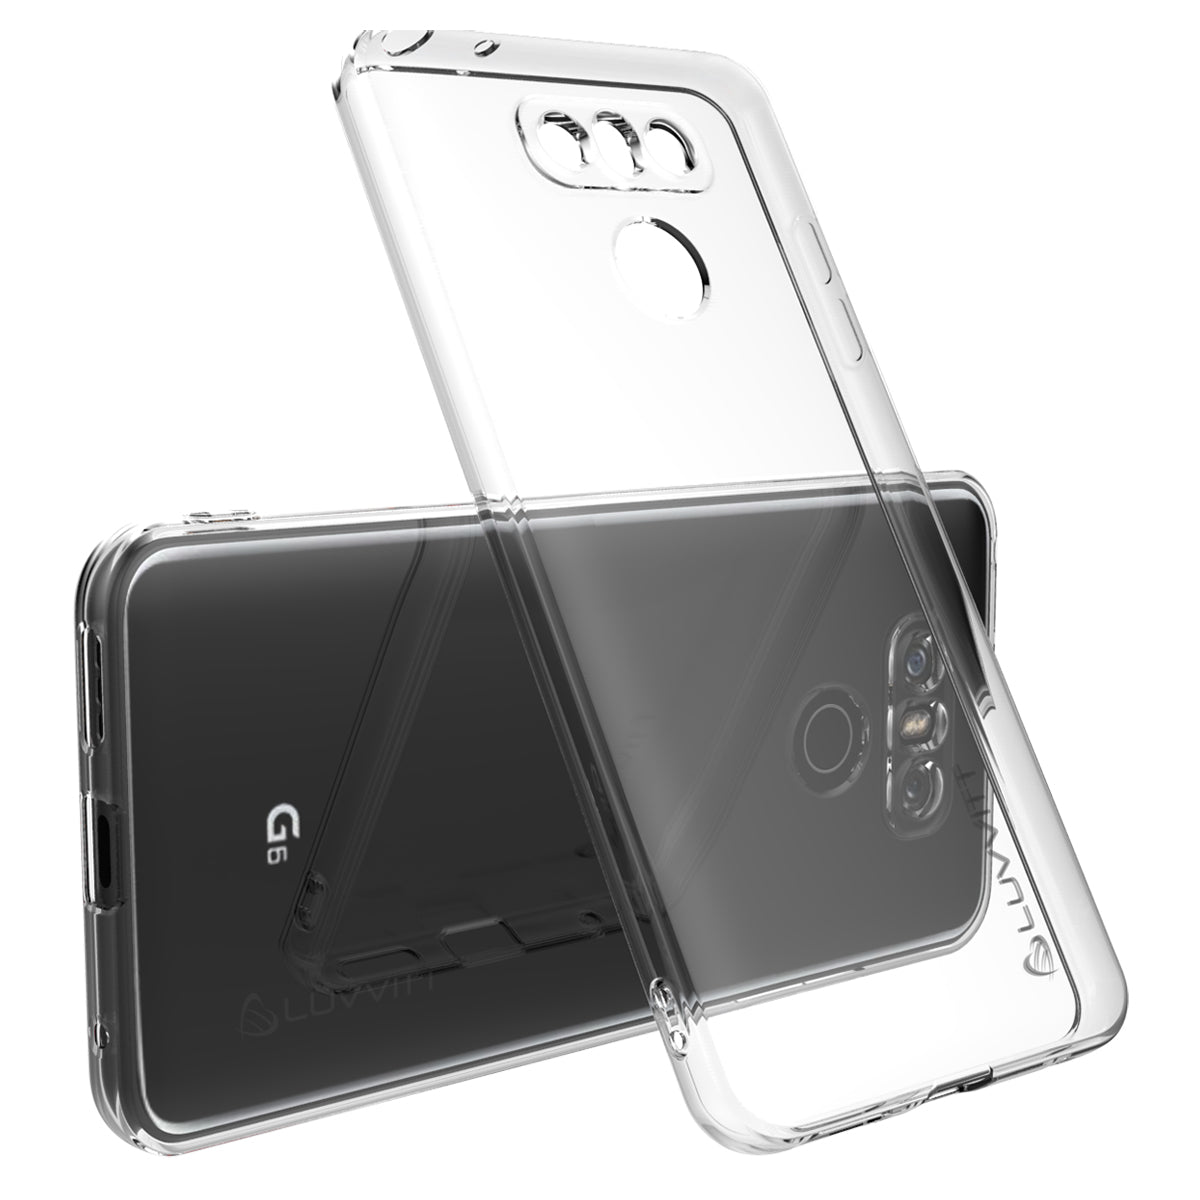 LUVVITT CLARITY Case for LG G6 - Clear